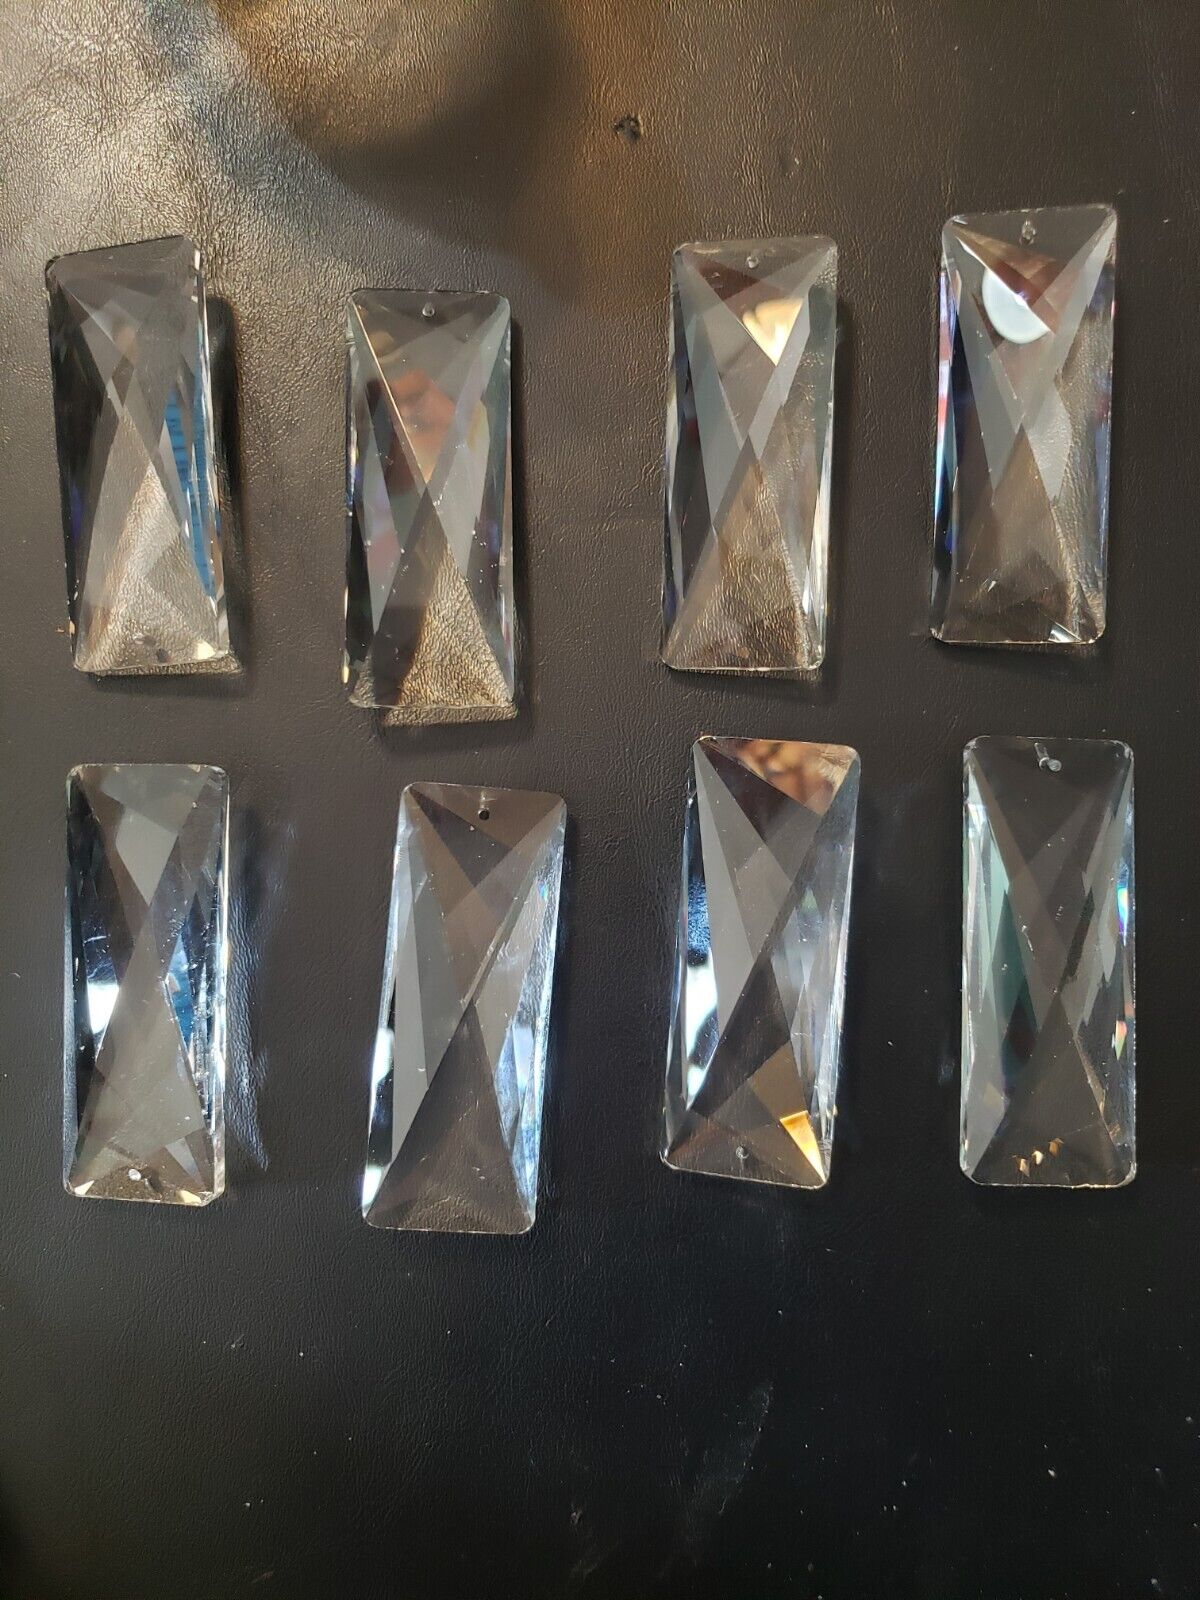  8 pcs Faceted Rectangle  Crystal Spacer Pendants Lamp Prism Chandelier Part